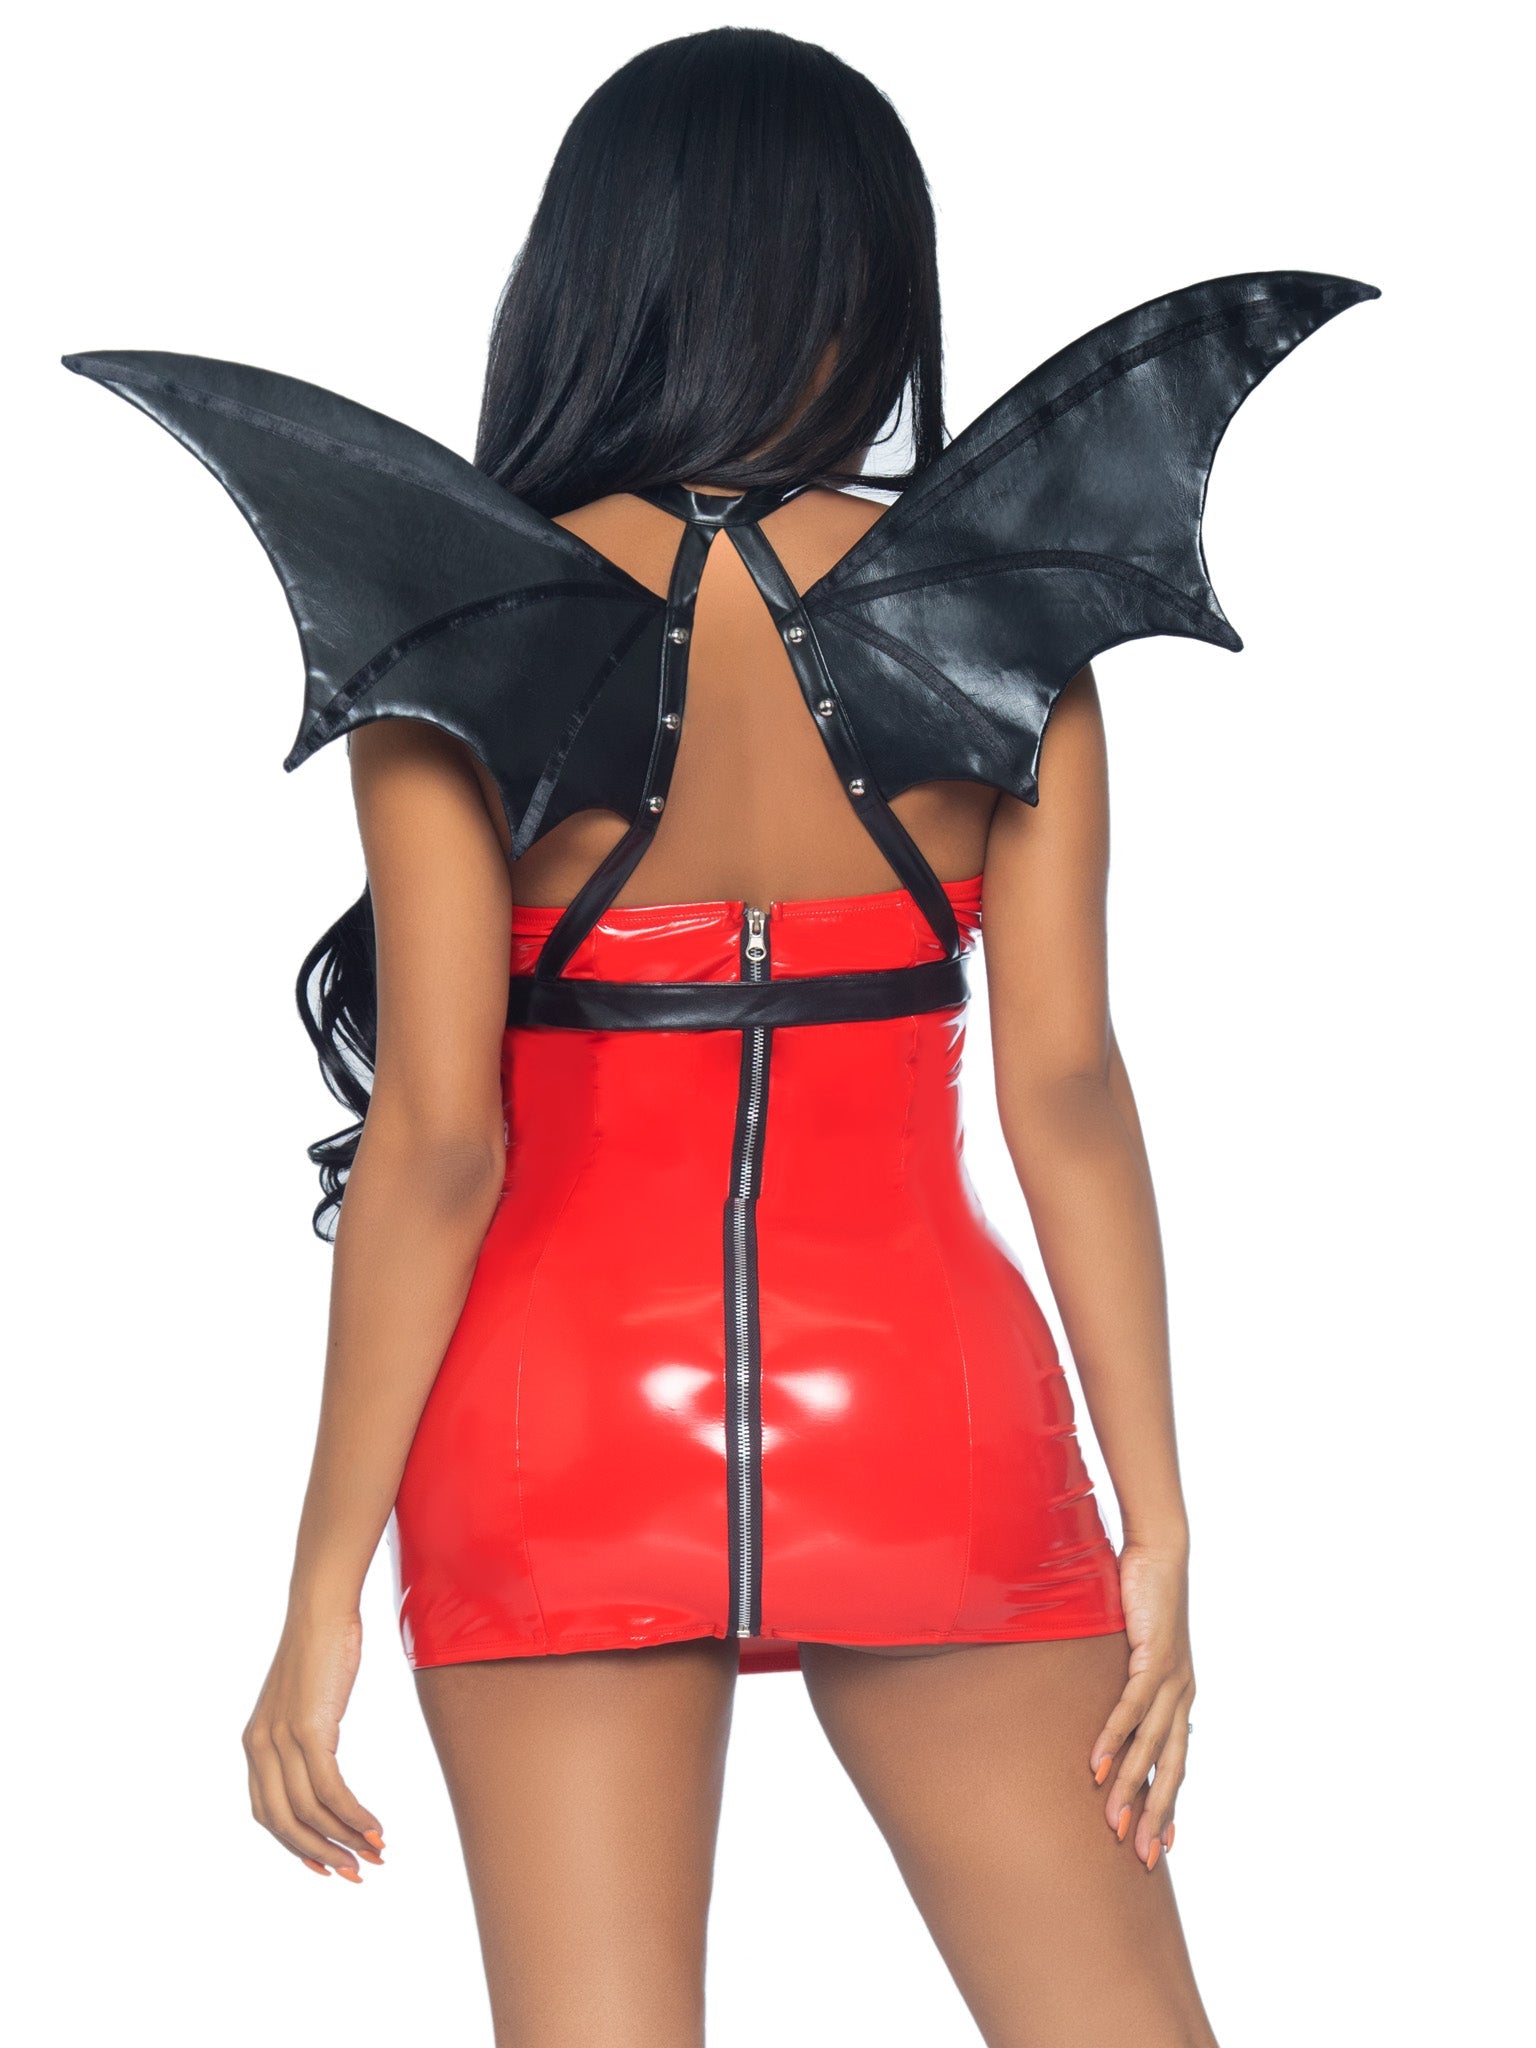 Bat Wing Body Harness